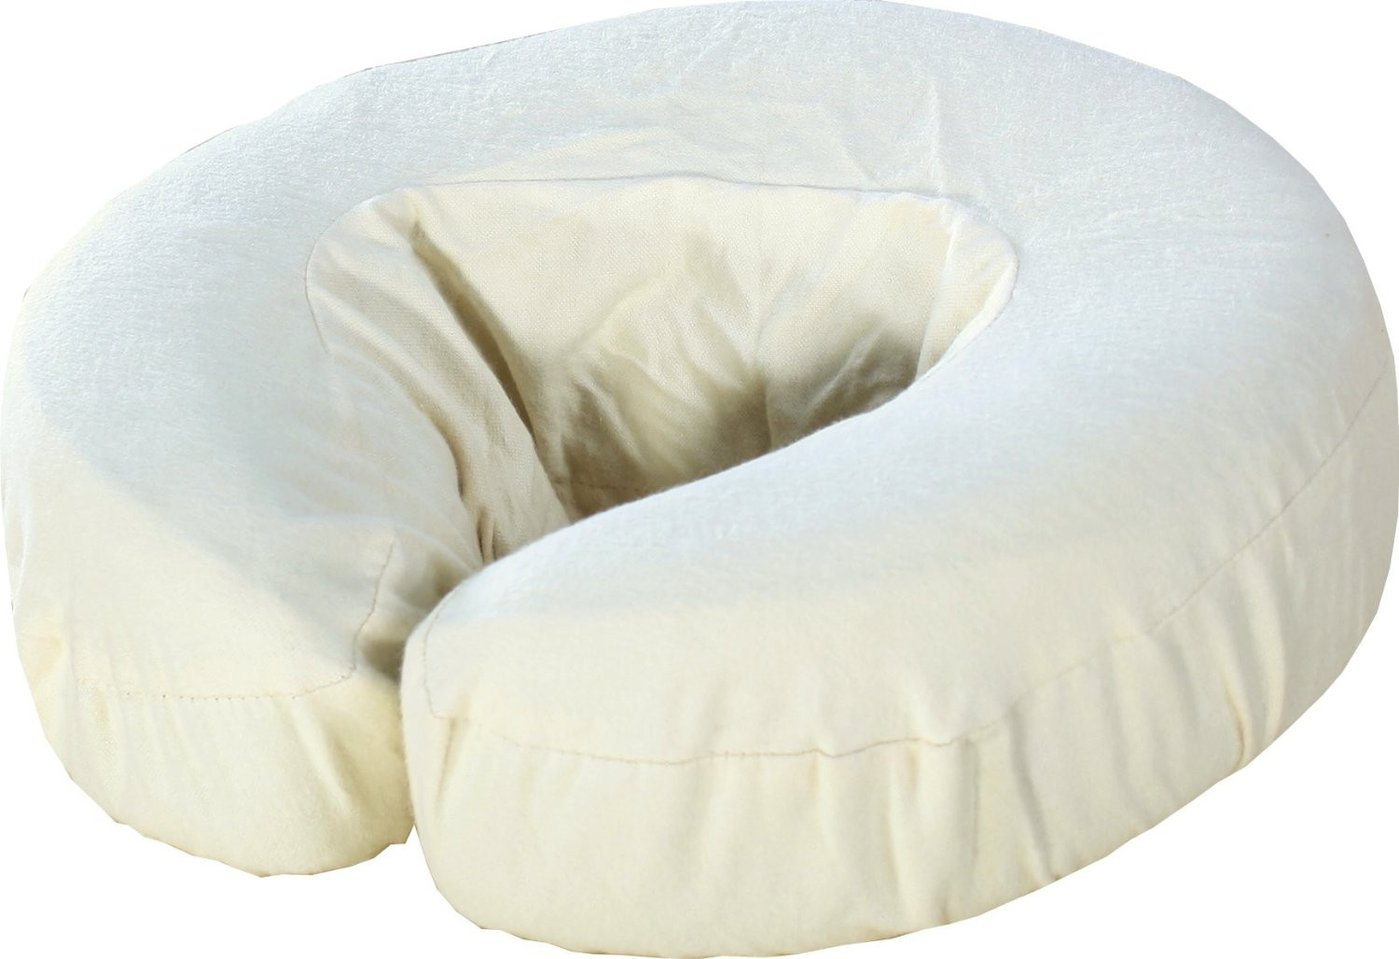 Deluxe Massage Table Flannel 3 Piece Sheet Set - 100% Cotton-Pure White